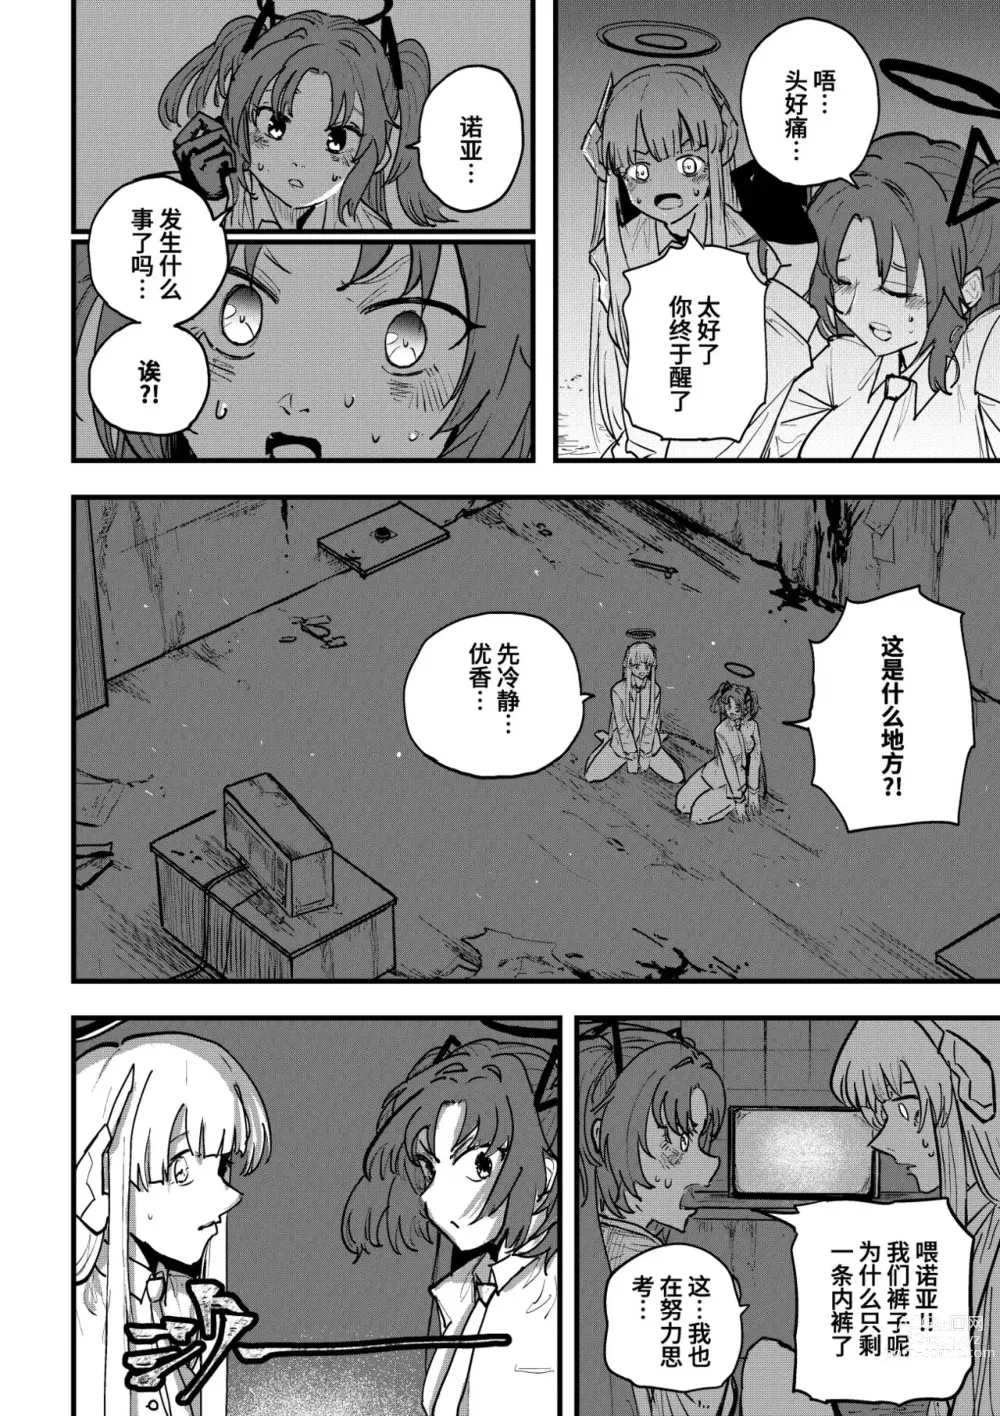 Page 2 of doujinshi Blue Saw